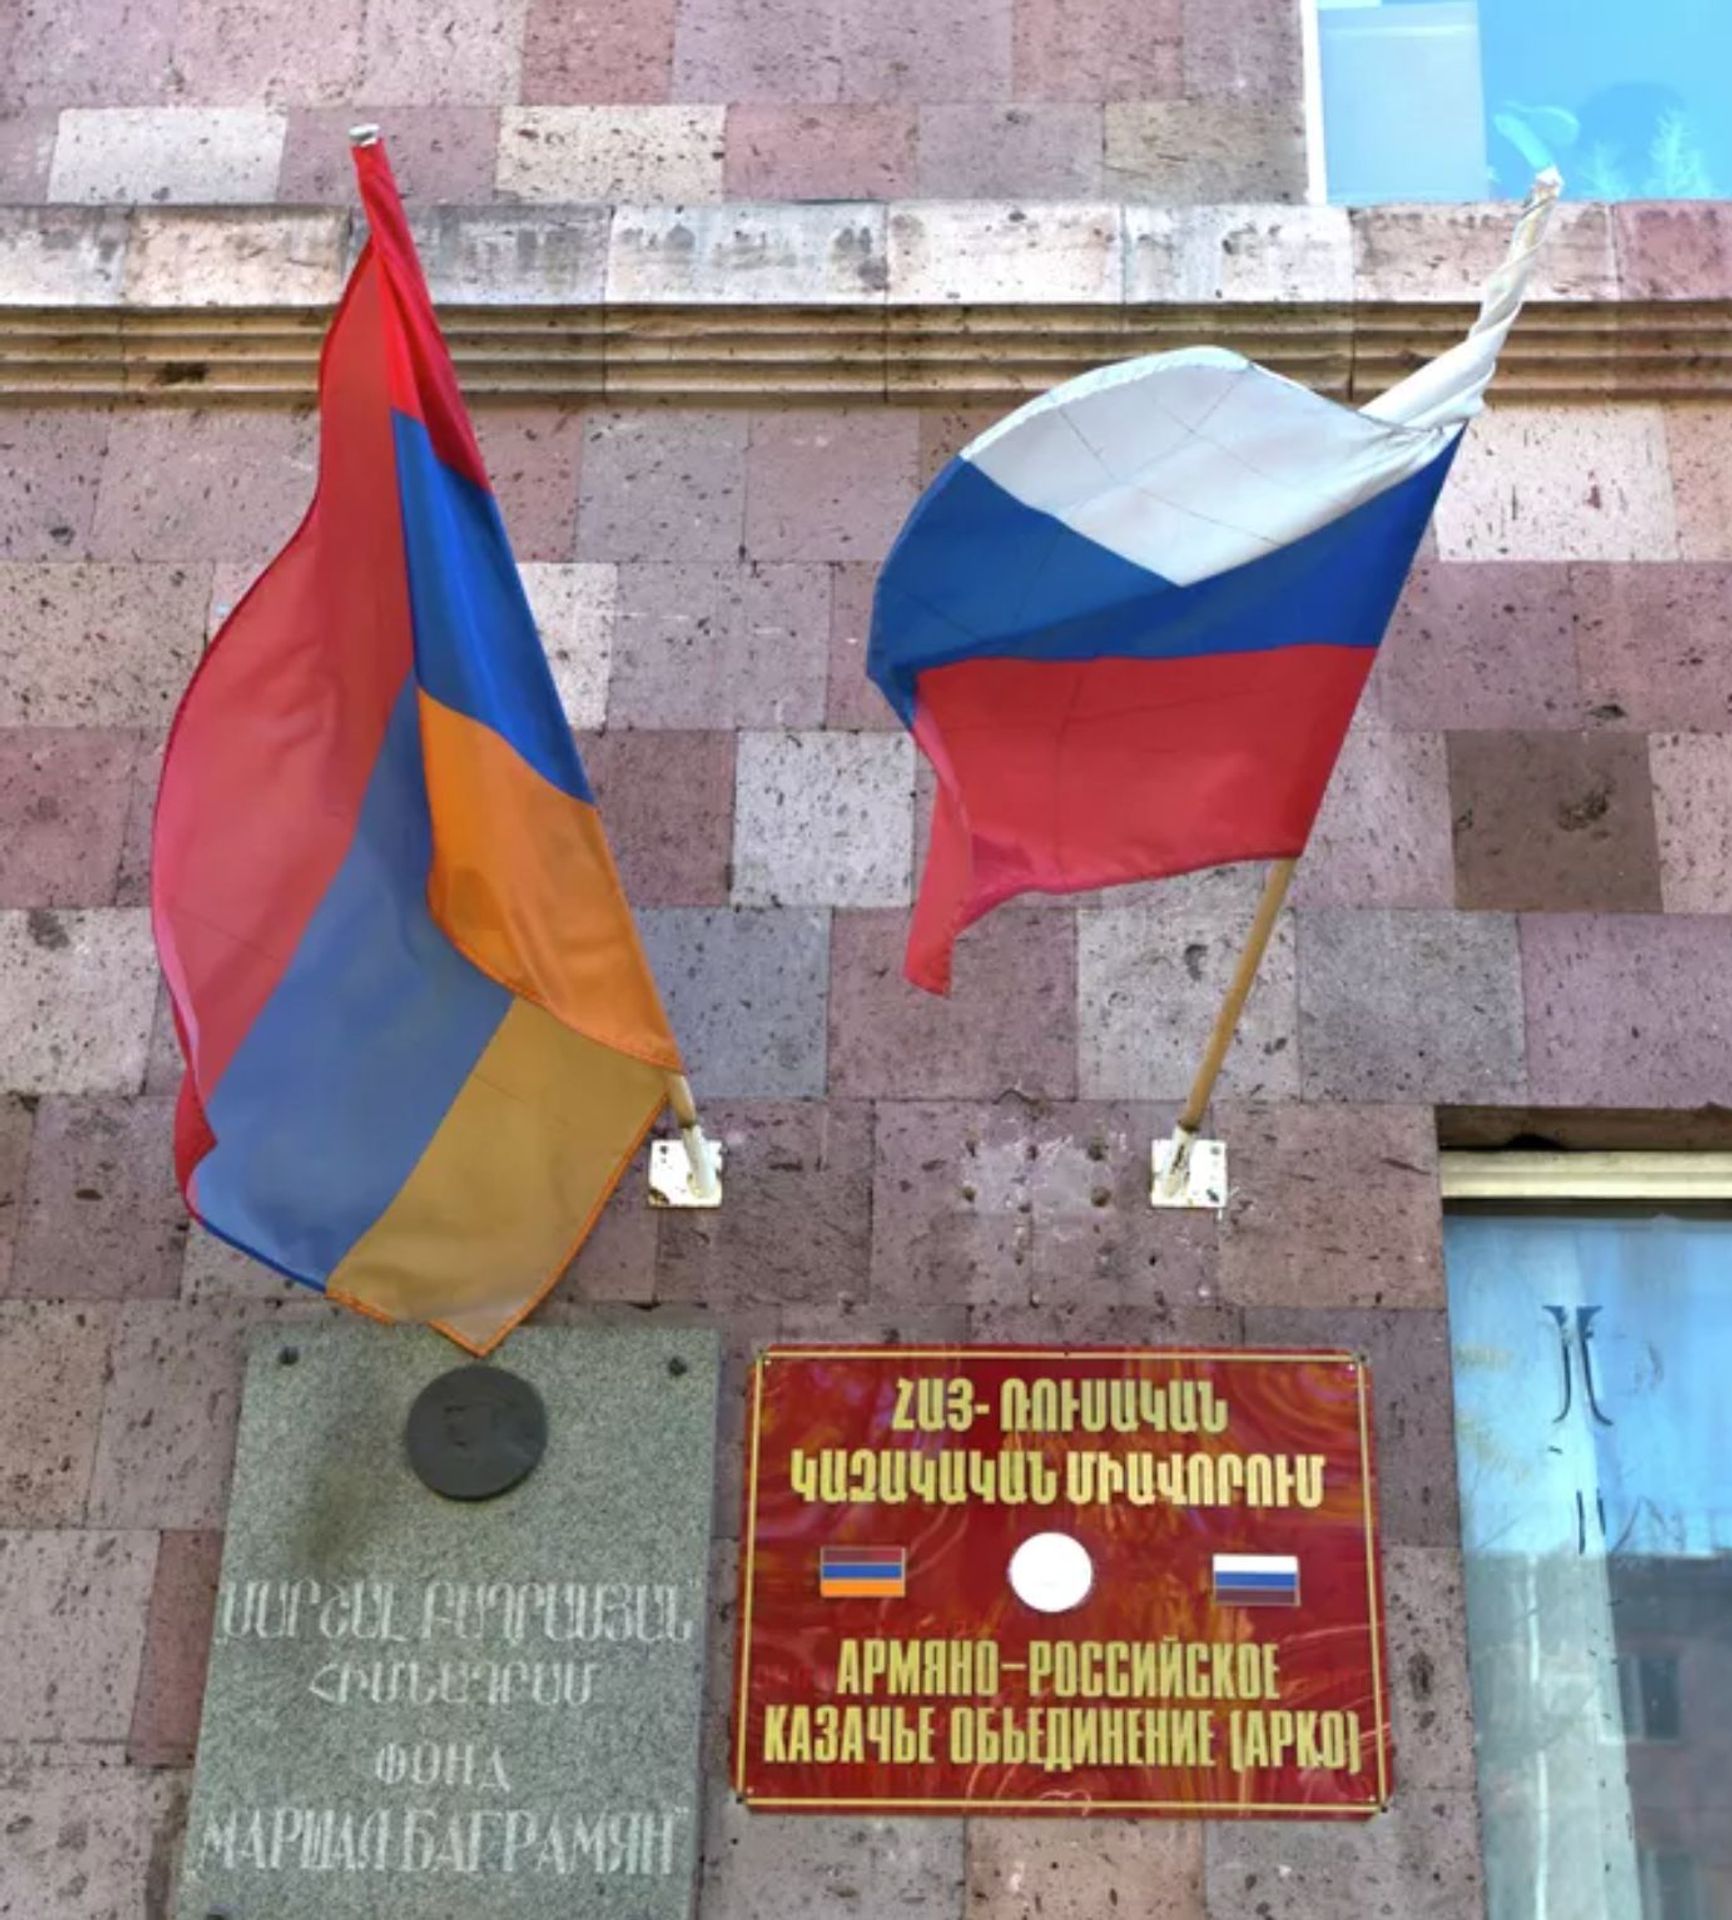 The Armenian-Russian Cossack Union building in Yerevan